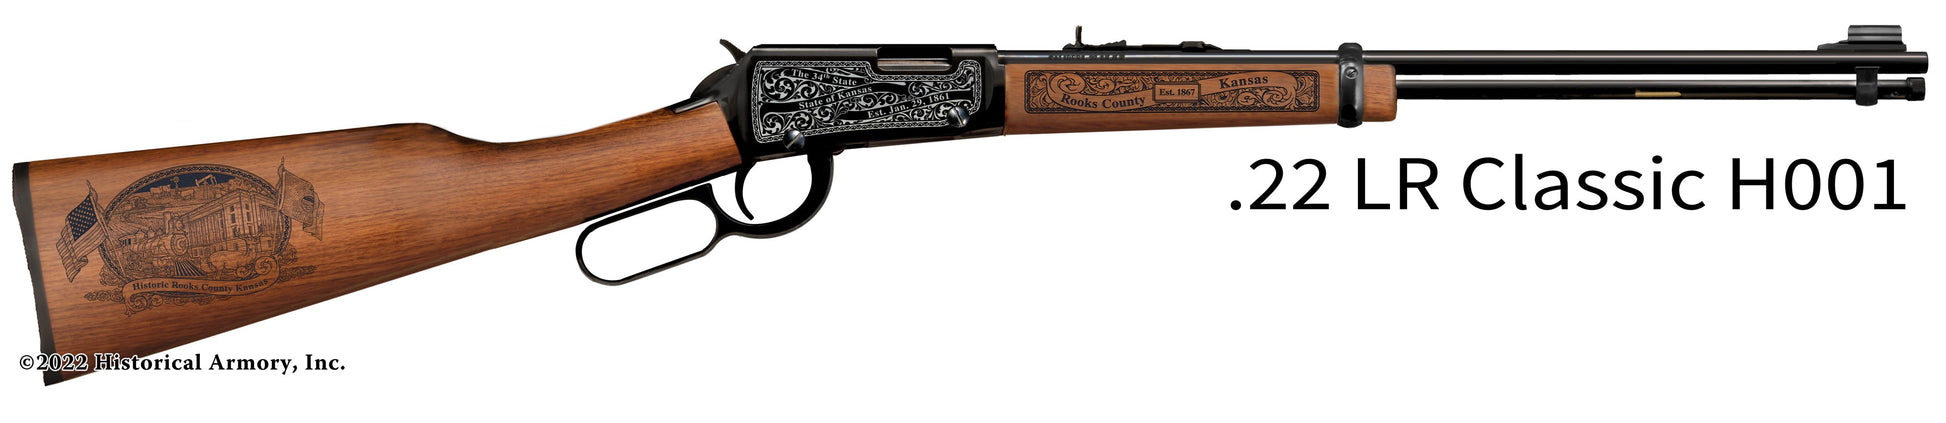 Rooks County Kansas Engraved Henry H001 Rifle